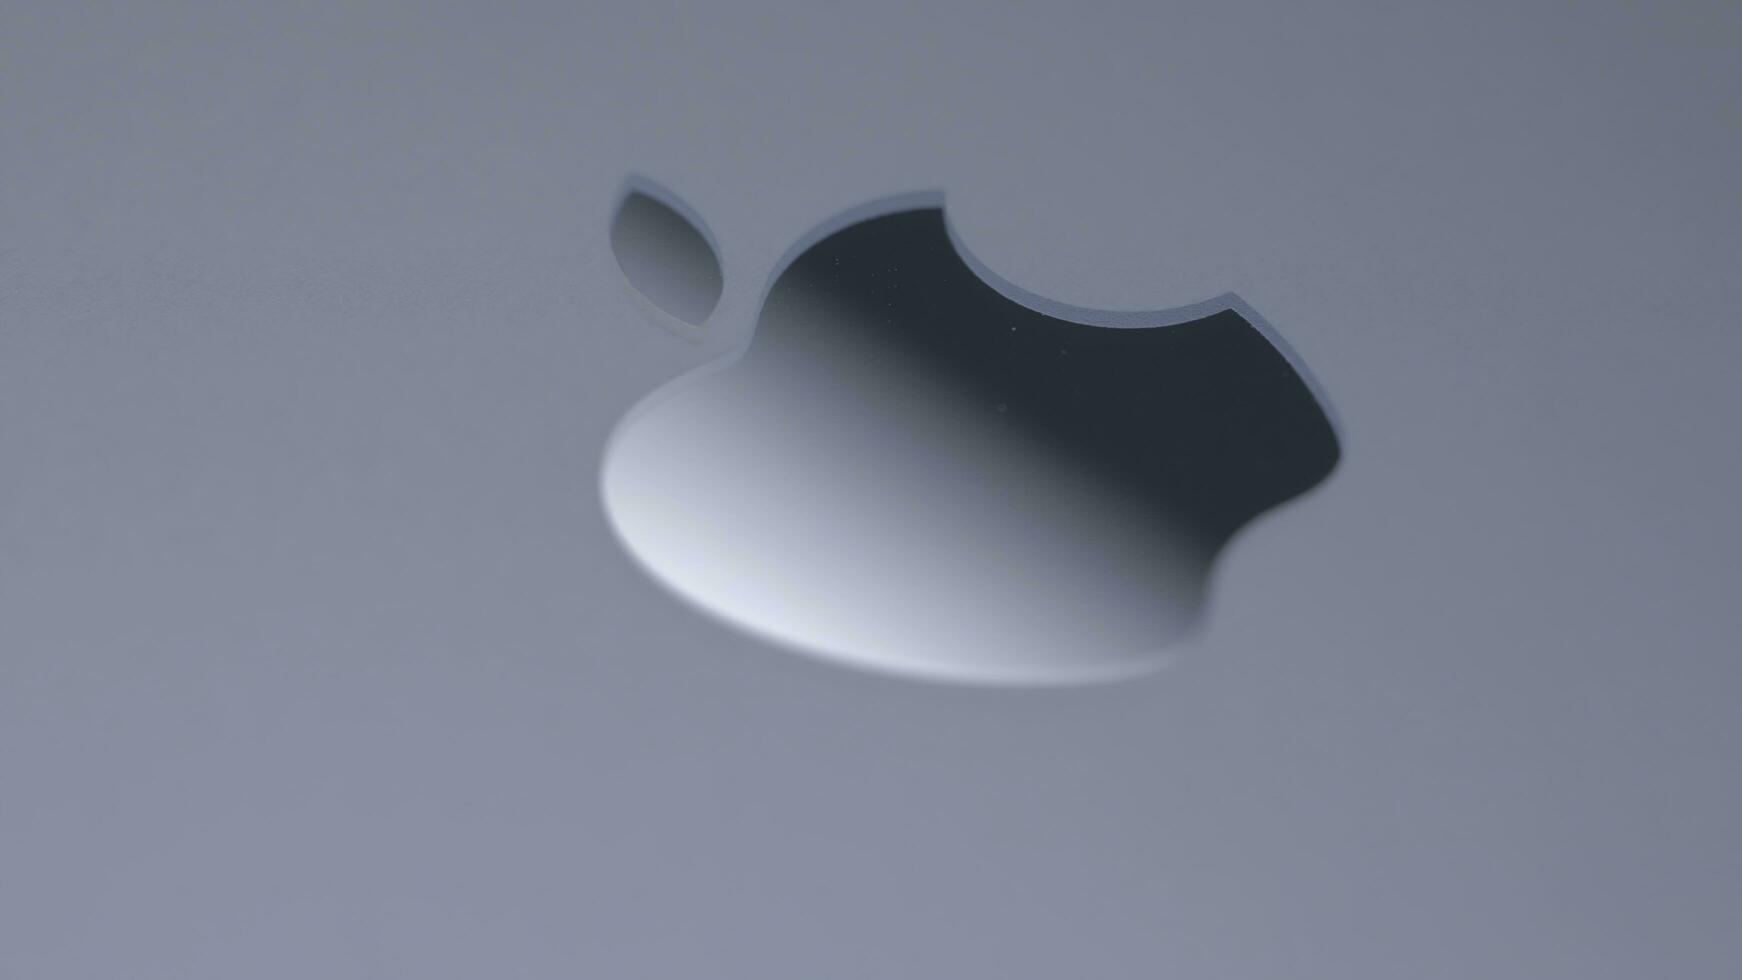 USA, New York - September 15, 2023. Close-up of Apple logo on gray background. Action. Stylish apple logo with shiny surface. Apple logo on MacBook or new iPhone photo